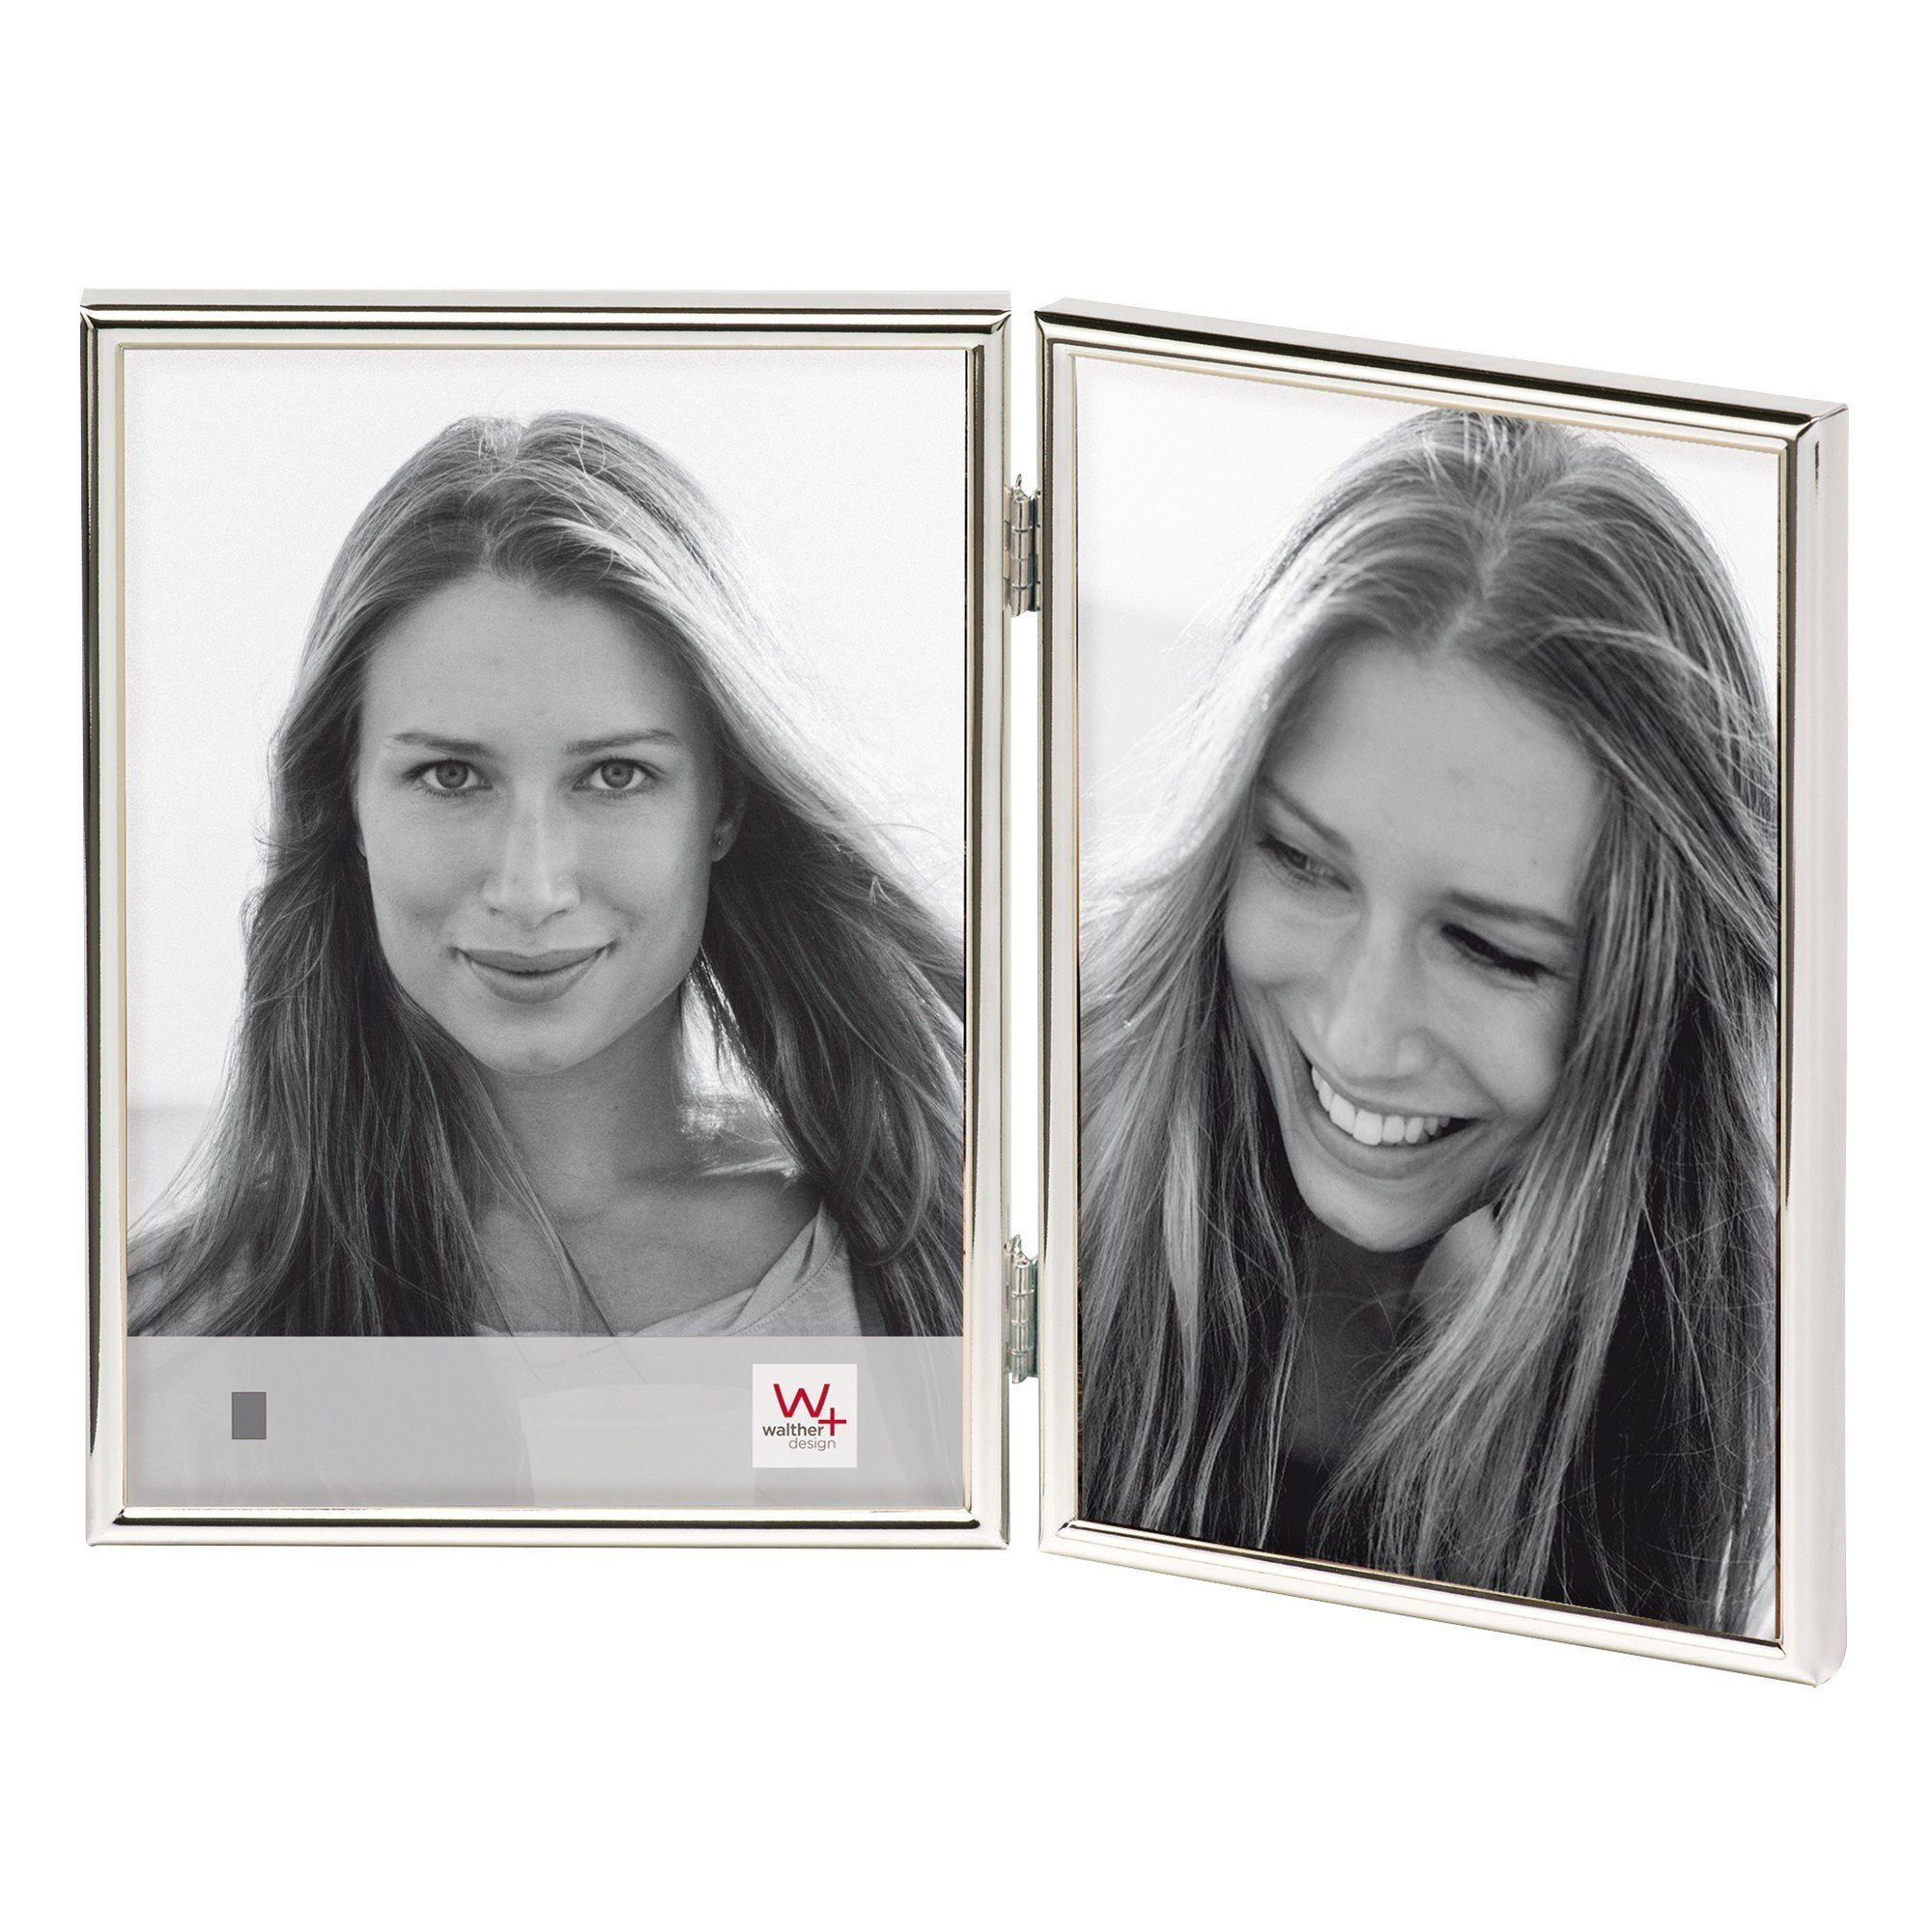 Walther Design Bilderrahmen Chloe Portraitr 2X9x13 cm silber | Einzelrahmen